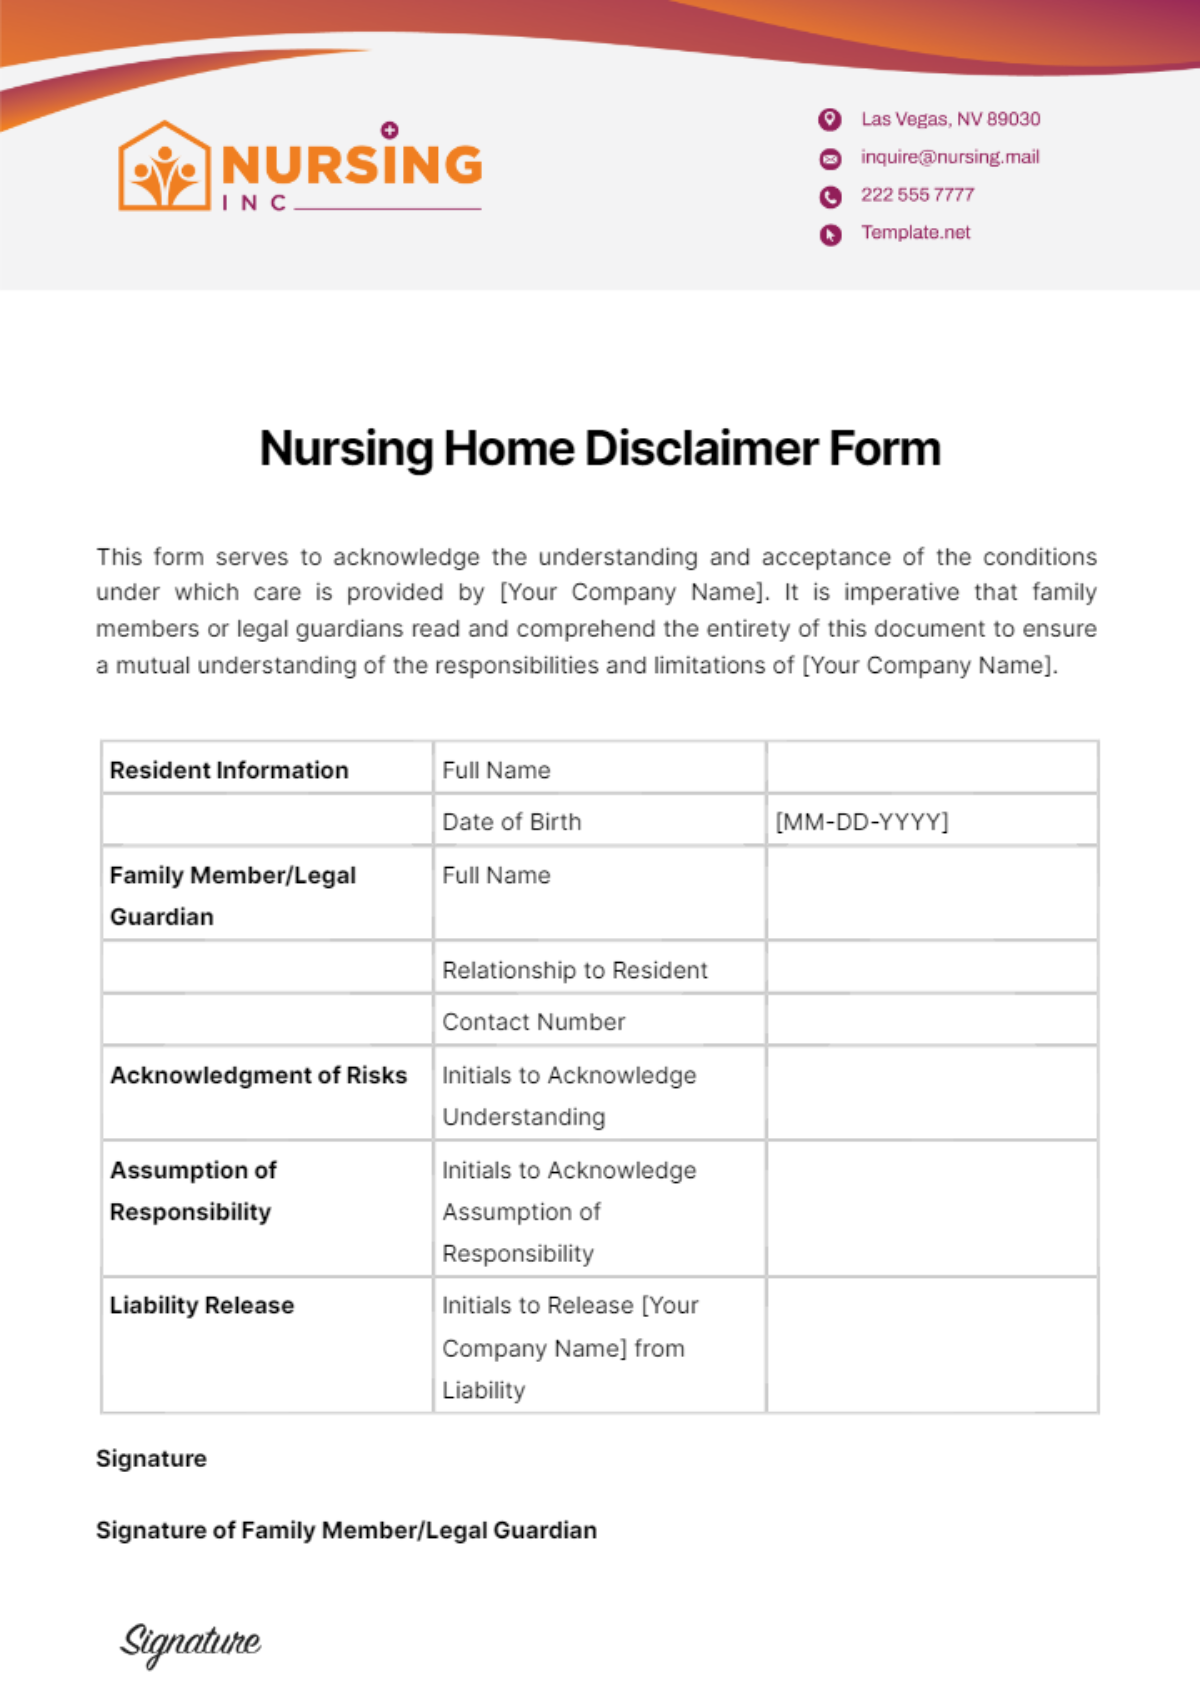 Nursing Home Disclaimer Form Template